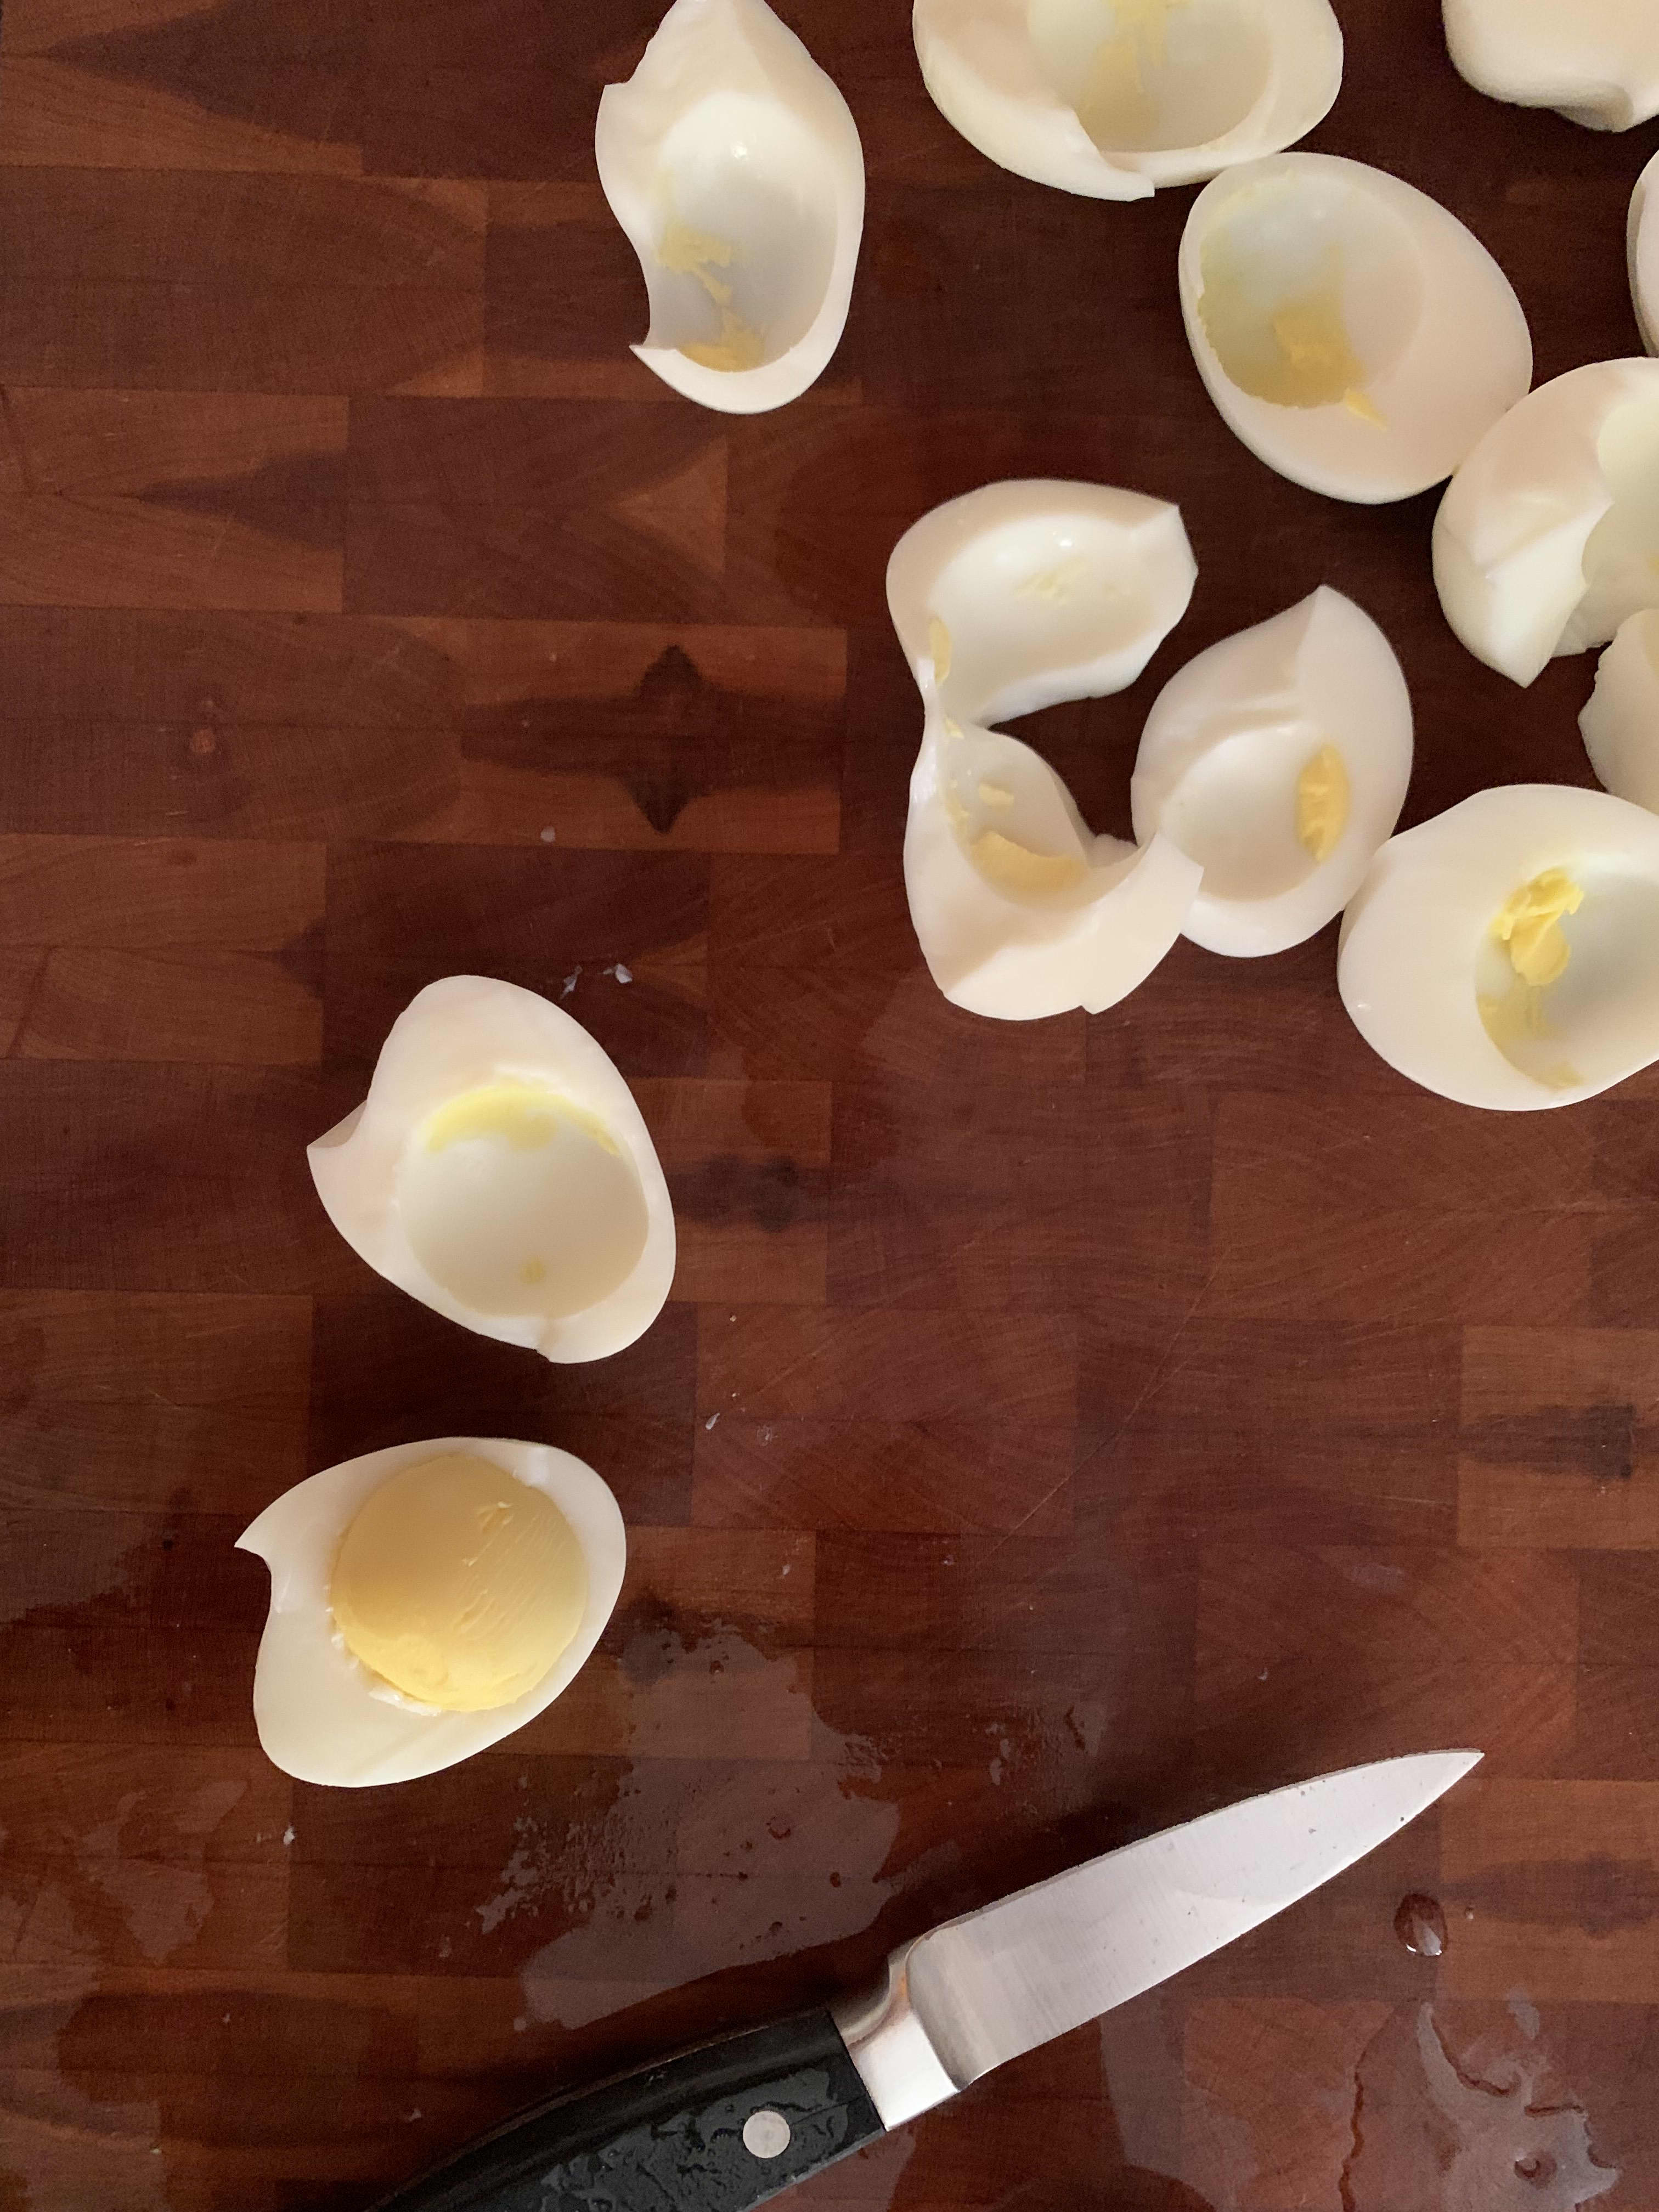 Woman's Hard-Boiled-Egg Slicing Technique for Deviled Eggs Goes Viral